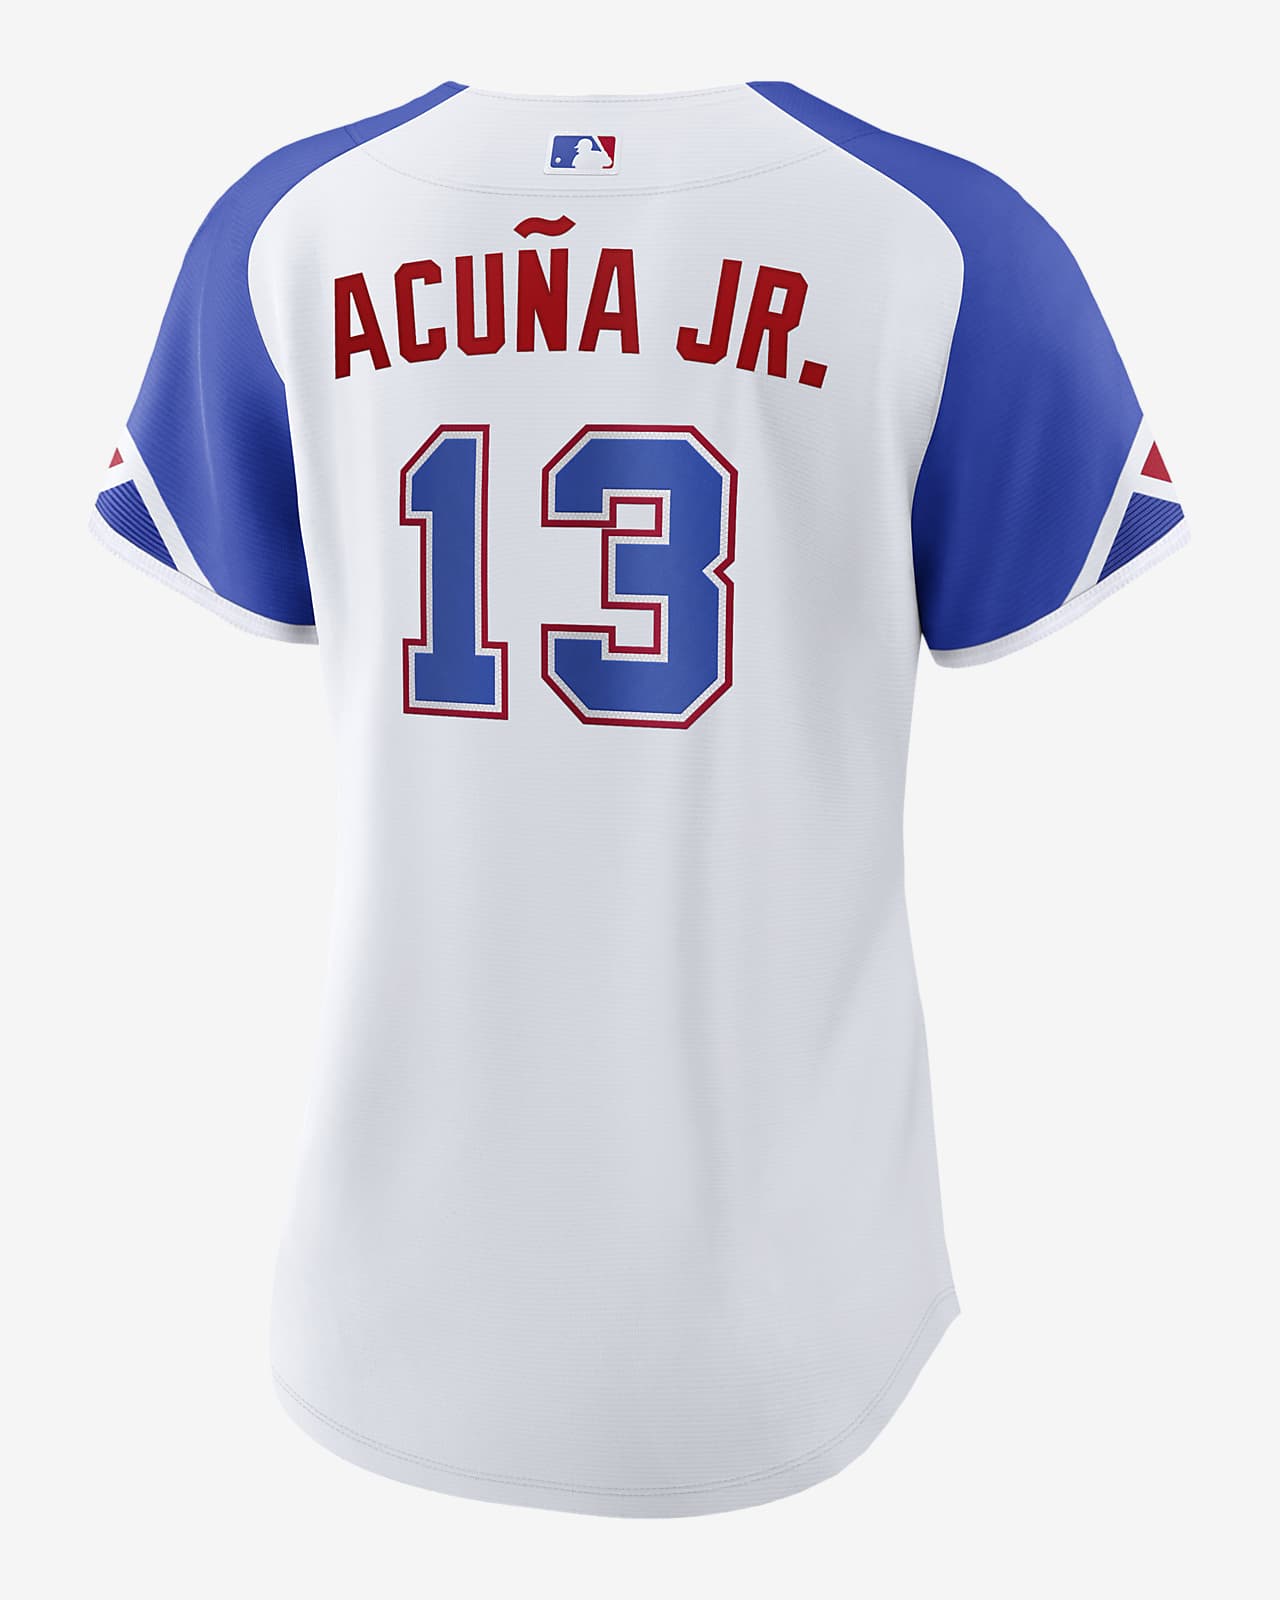 ronald acuna jr authentic jersey